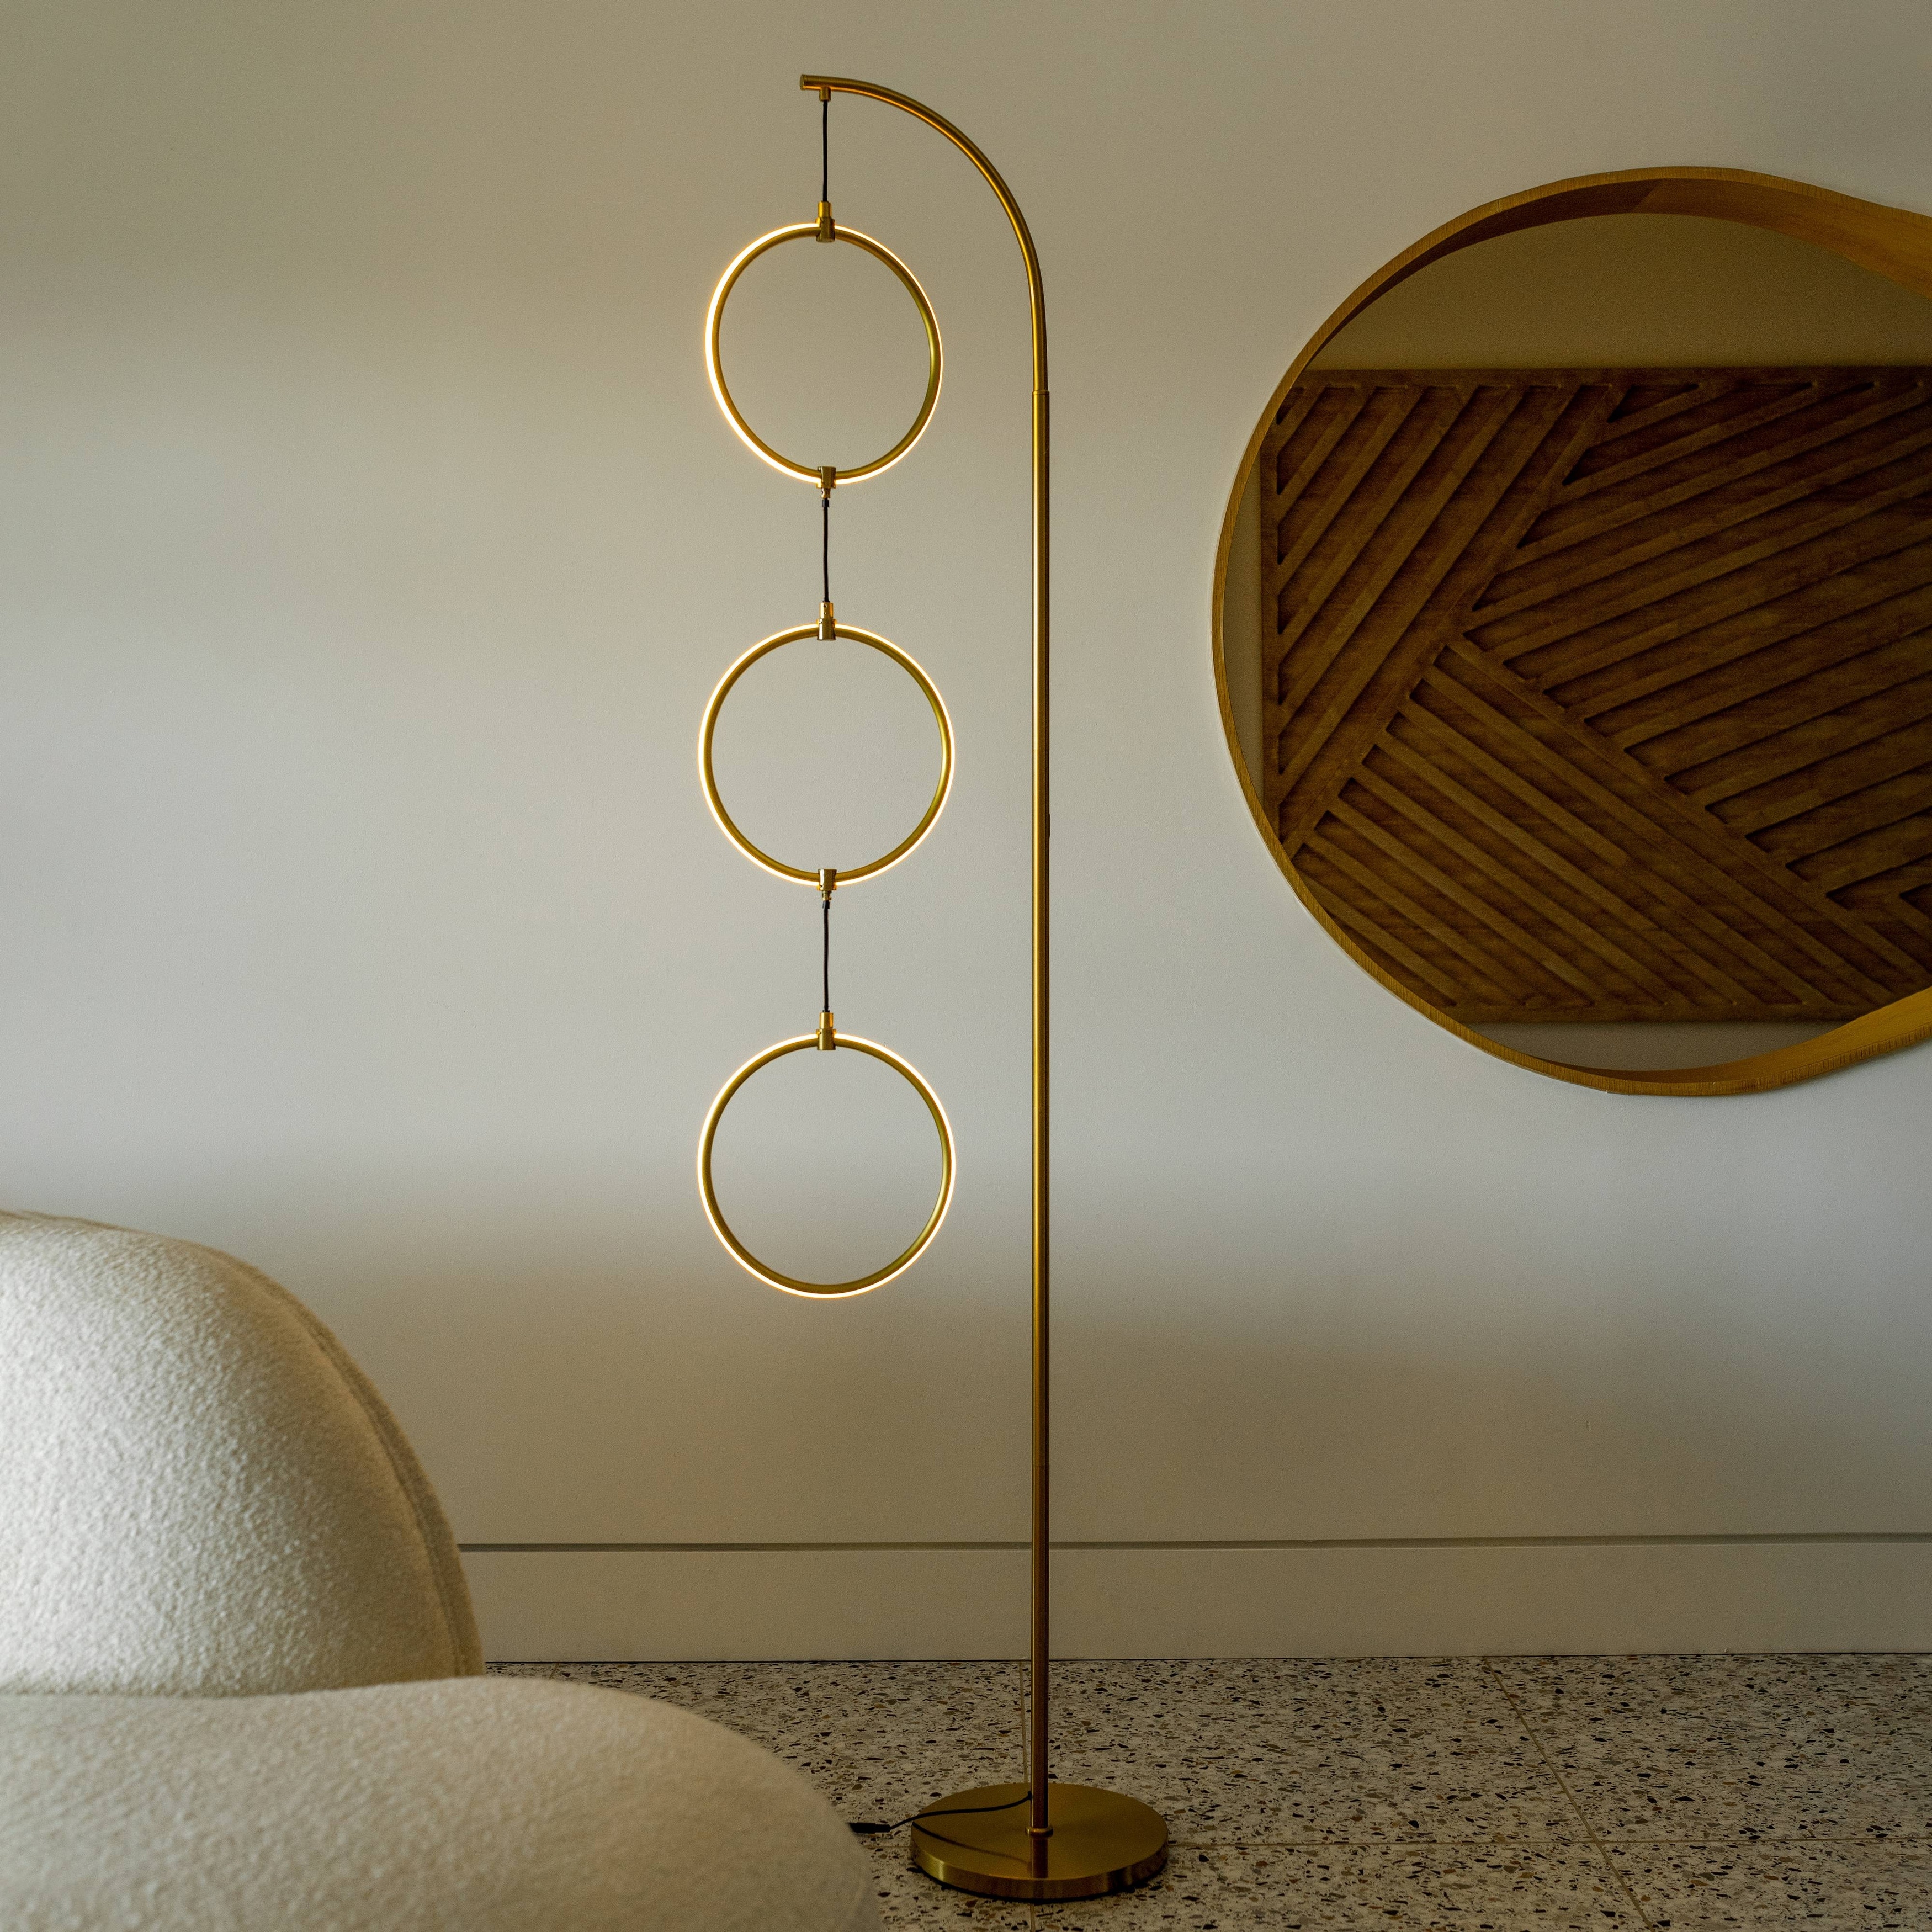 Buy Royal Brass Antique Floor Lamp - Standing Lamp 5 Ft Height